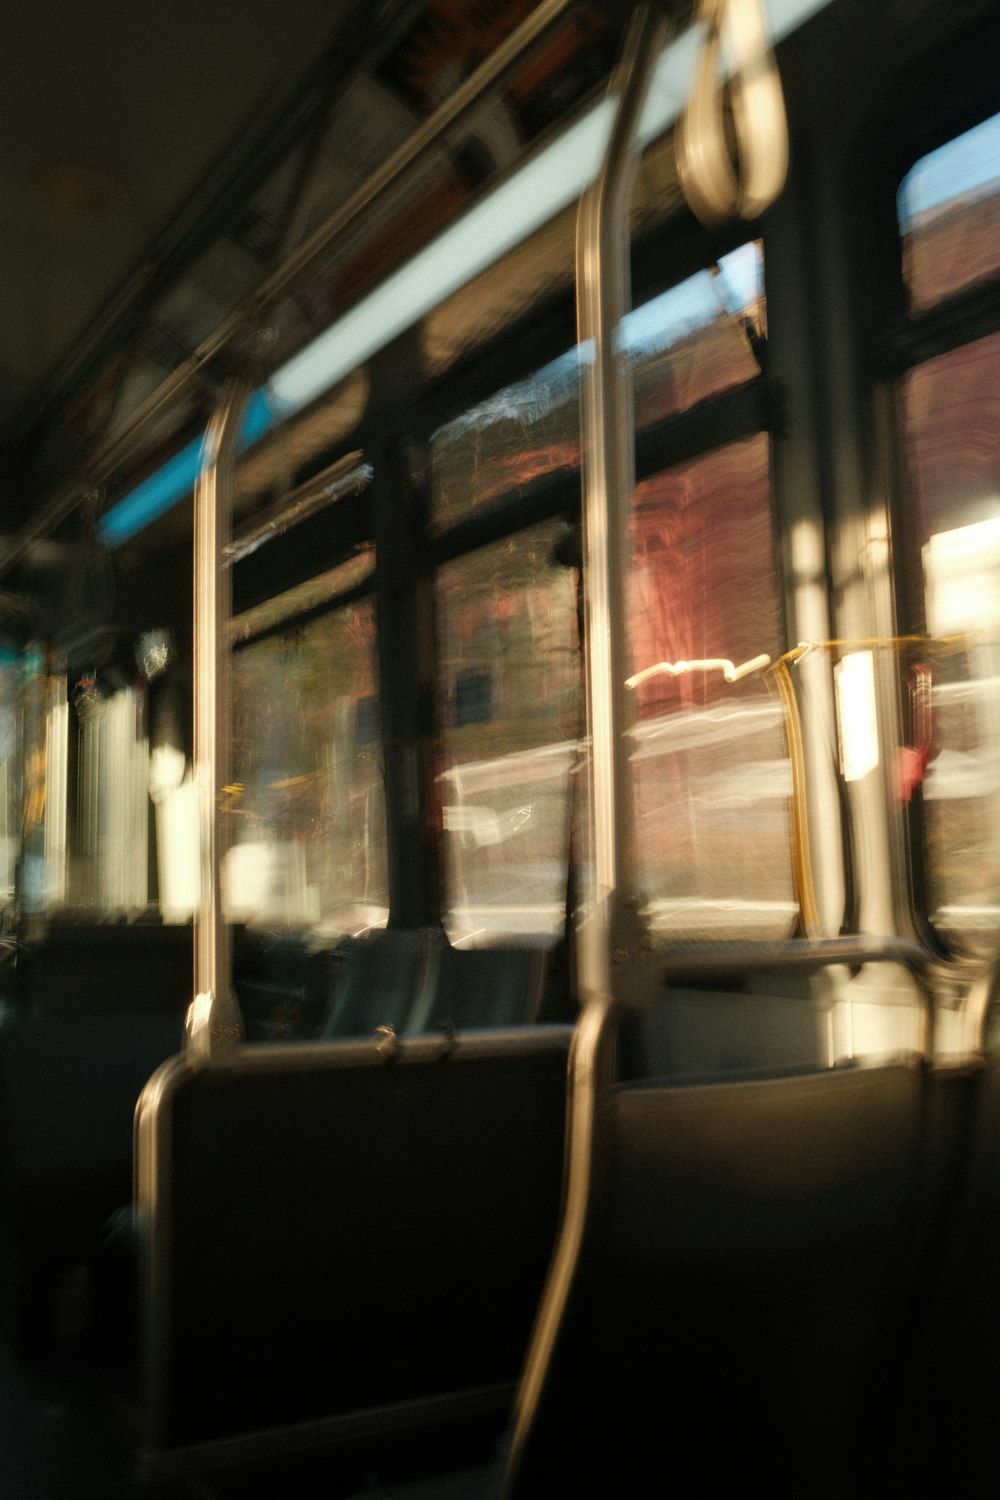 a blurry photo of a public transit bus